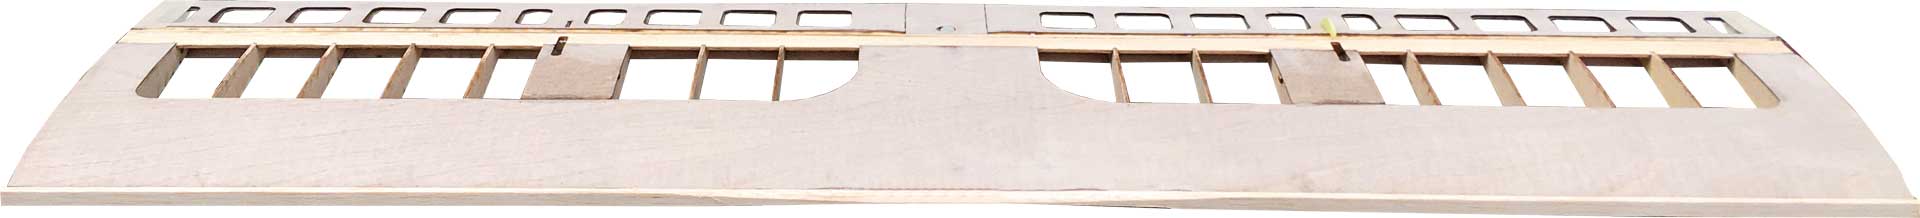 Robbe Modellsport Haupttragfläche / Holzteilesatz Slider QE / Q